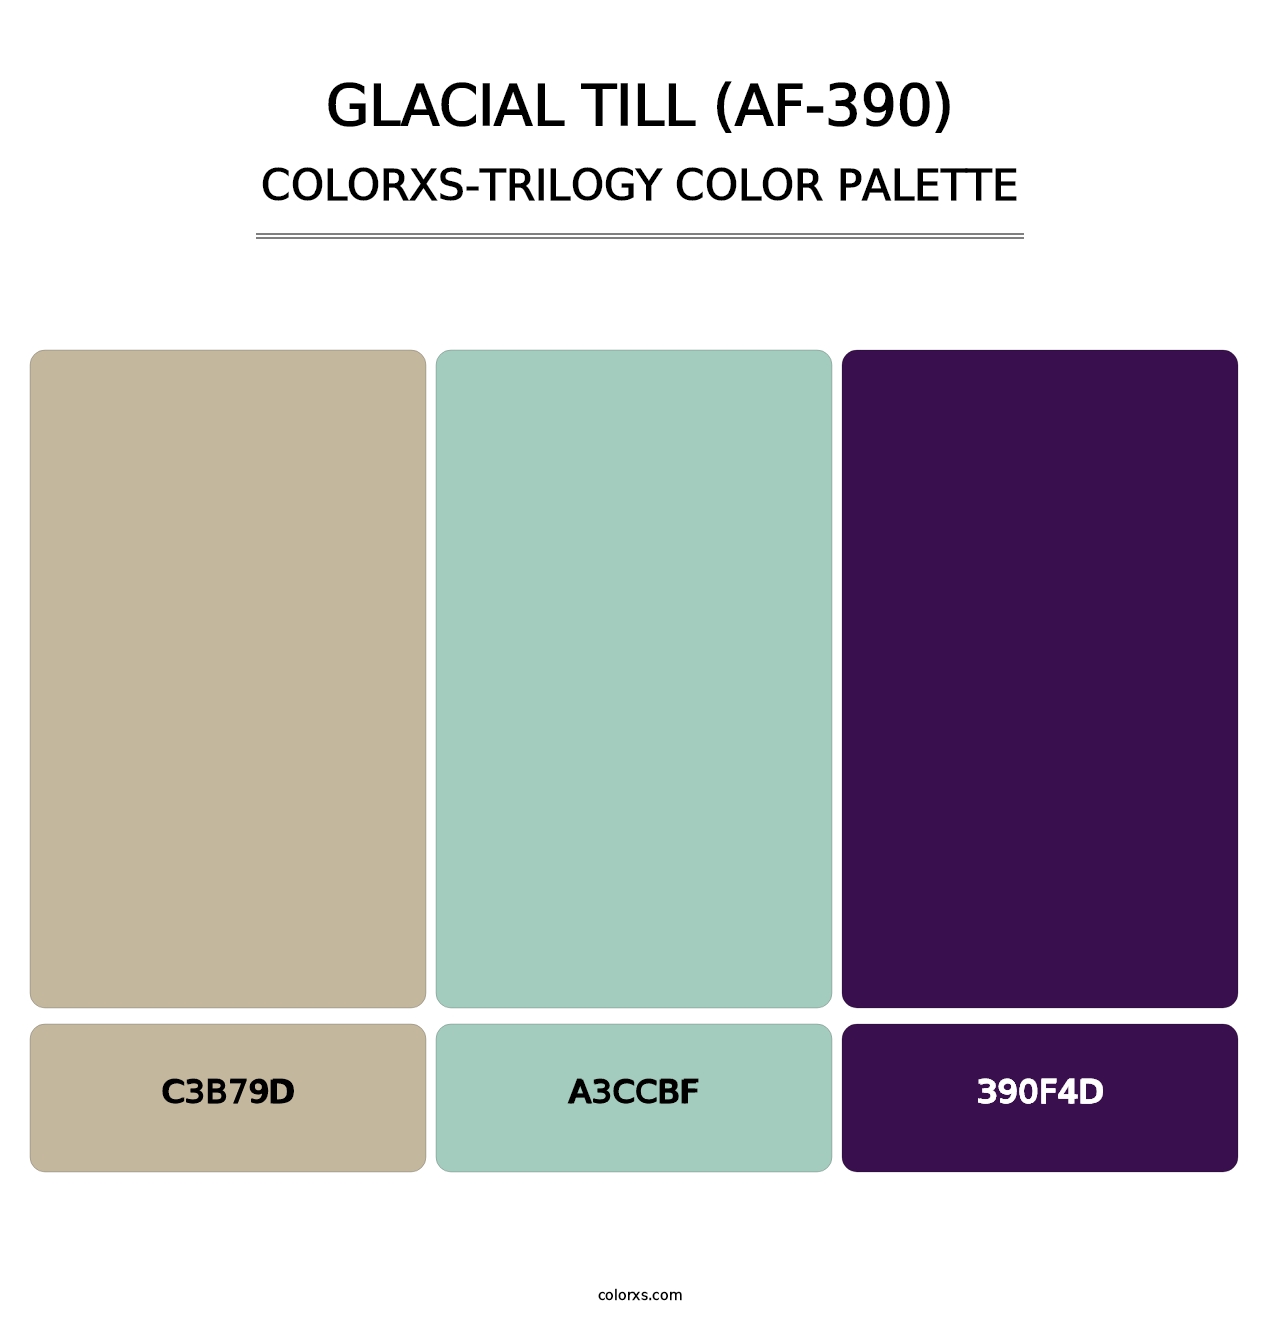 Glacial Till (AF-390) - Colorxs Trilogy Palette